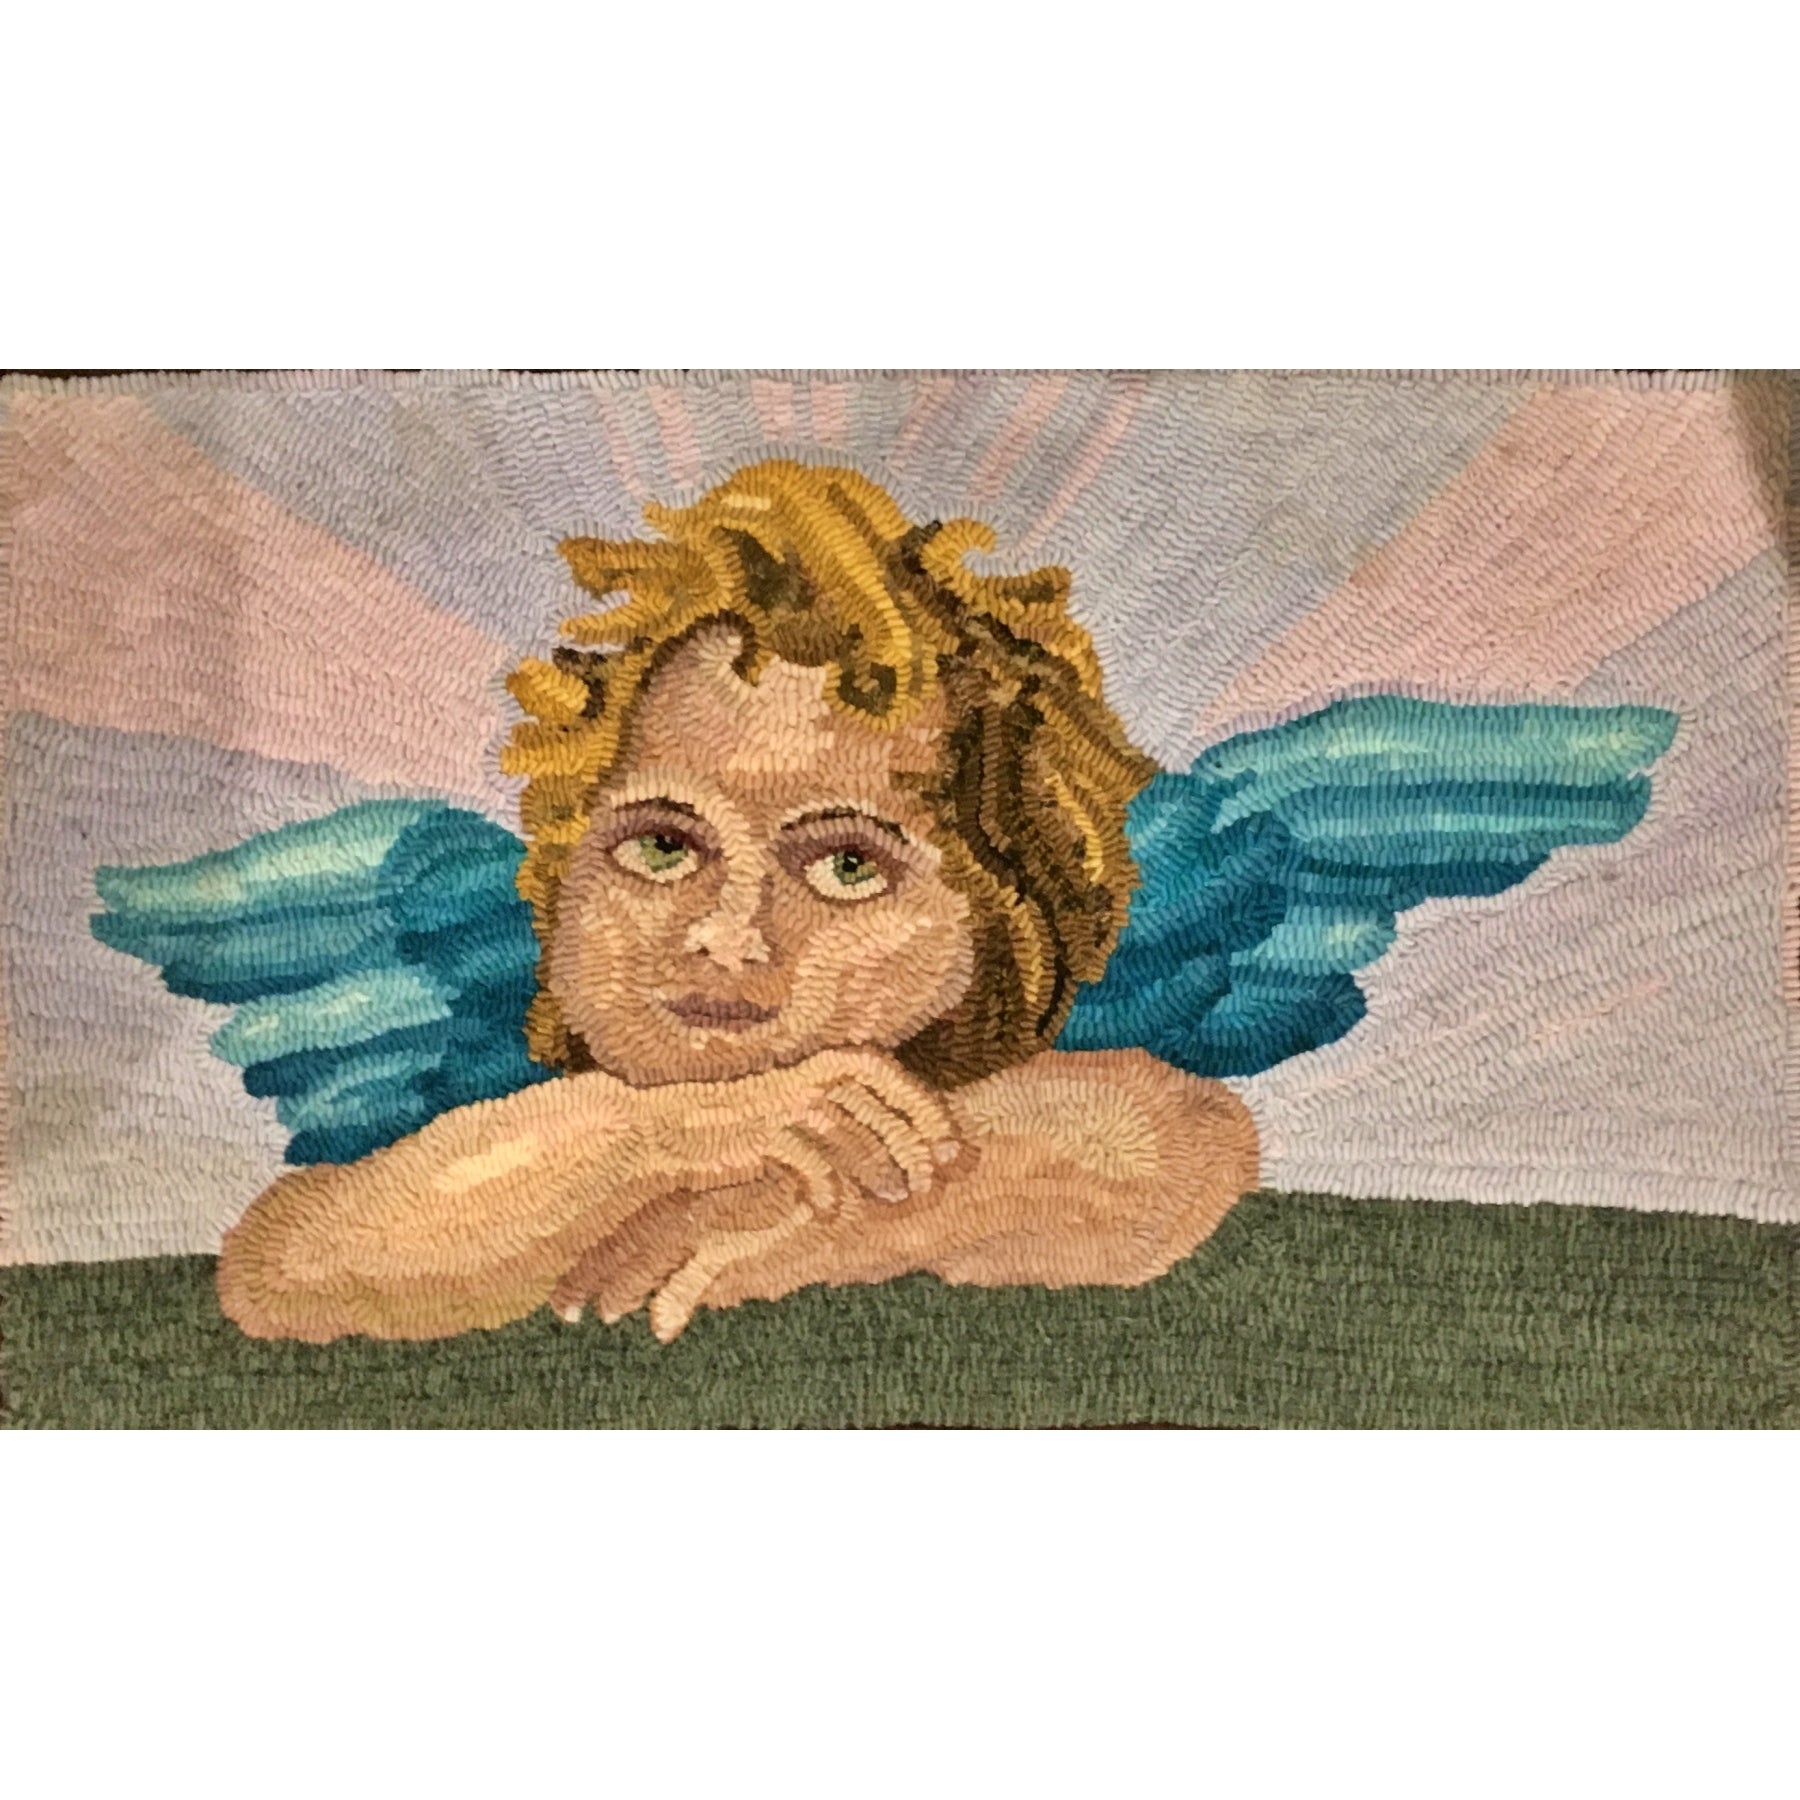 Raphael's Angel, rug hooked by Marty Liptak